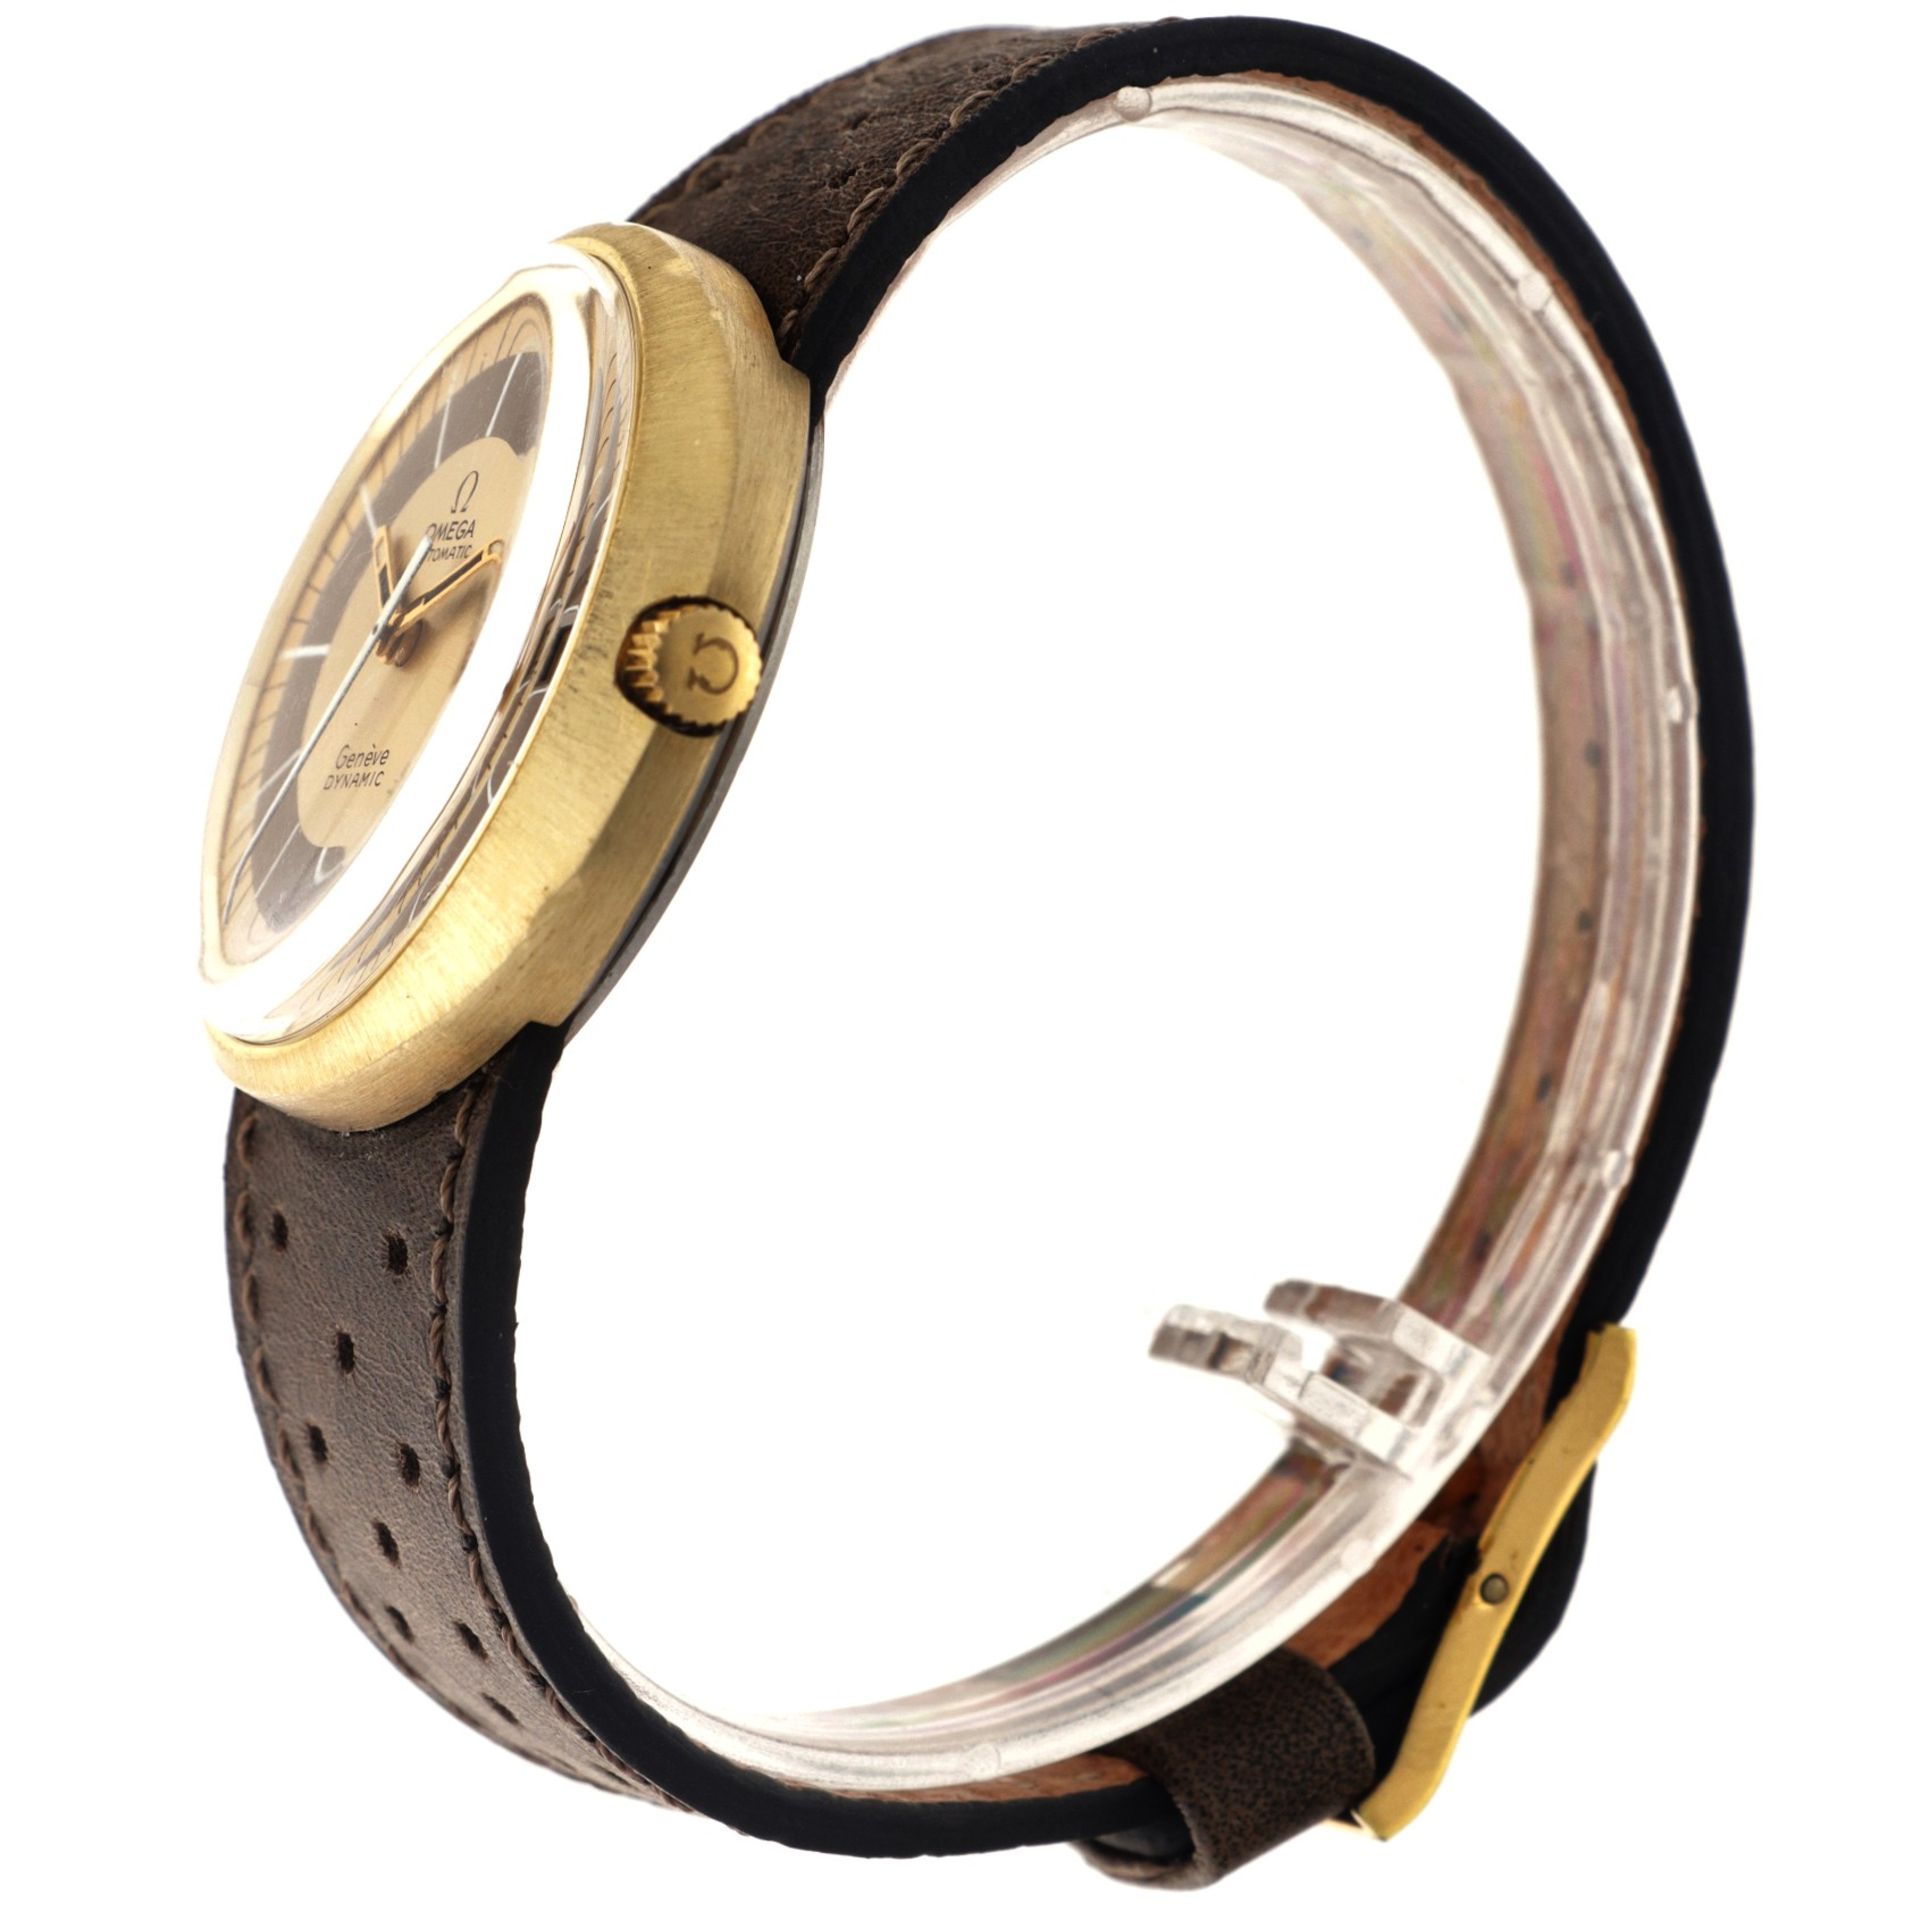 No Reserve - Omega Geneva Dynamic 166.079 - Men's watch.  - Image 5 of 5